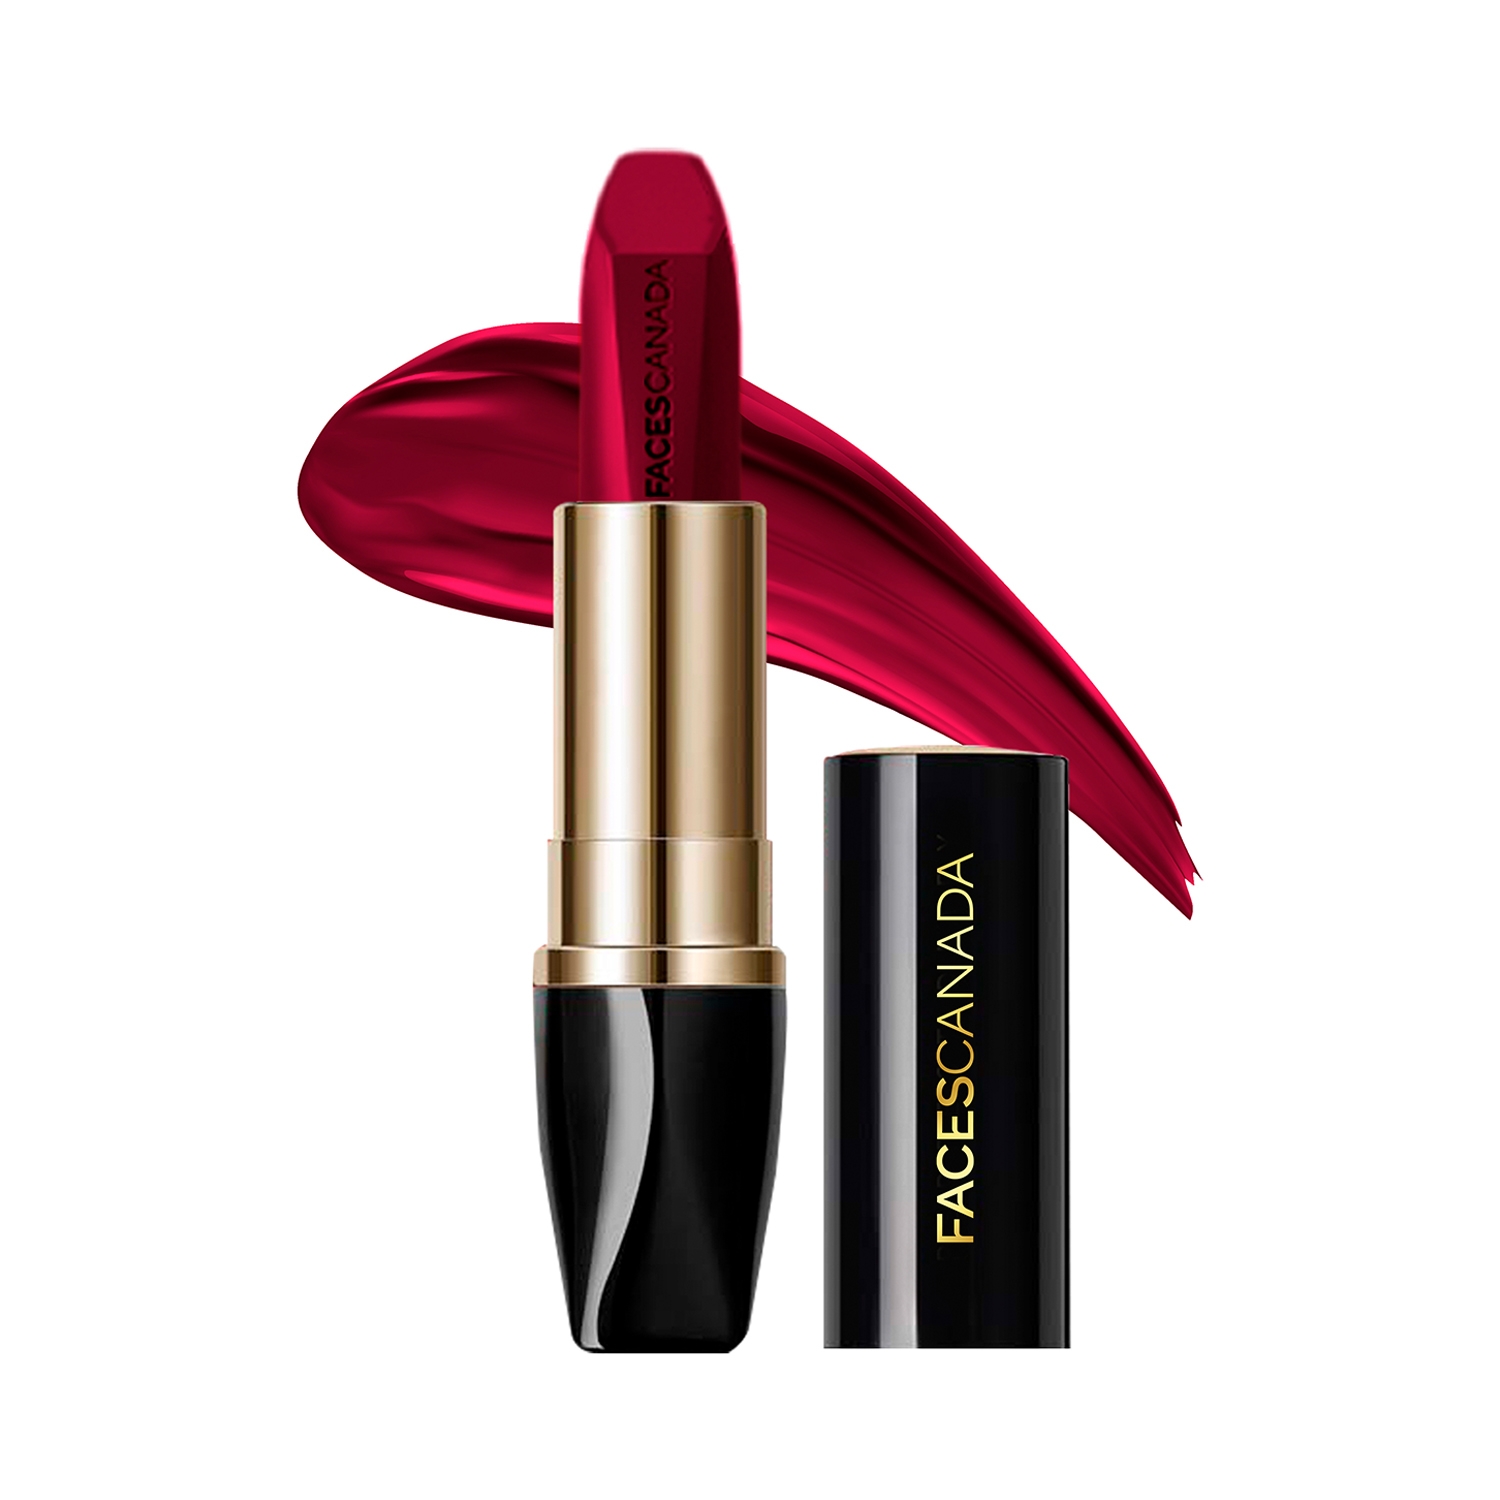 Faces Canada | Faces Canada Matte Addiction Lipstick 9HR Stay HD Finish Intense Color - Delicate Plum (3.7g)